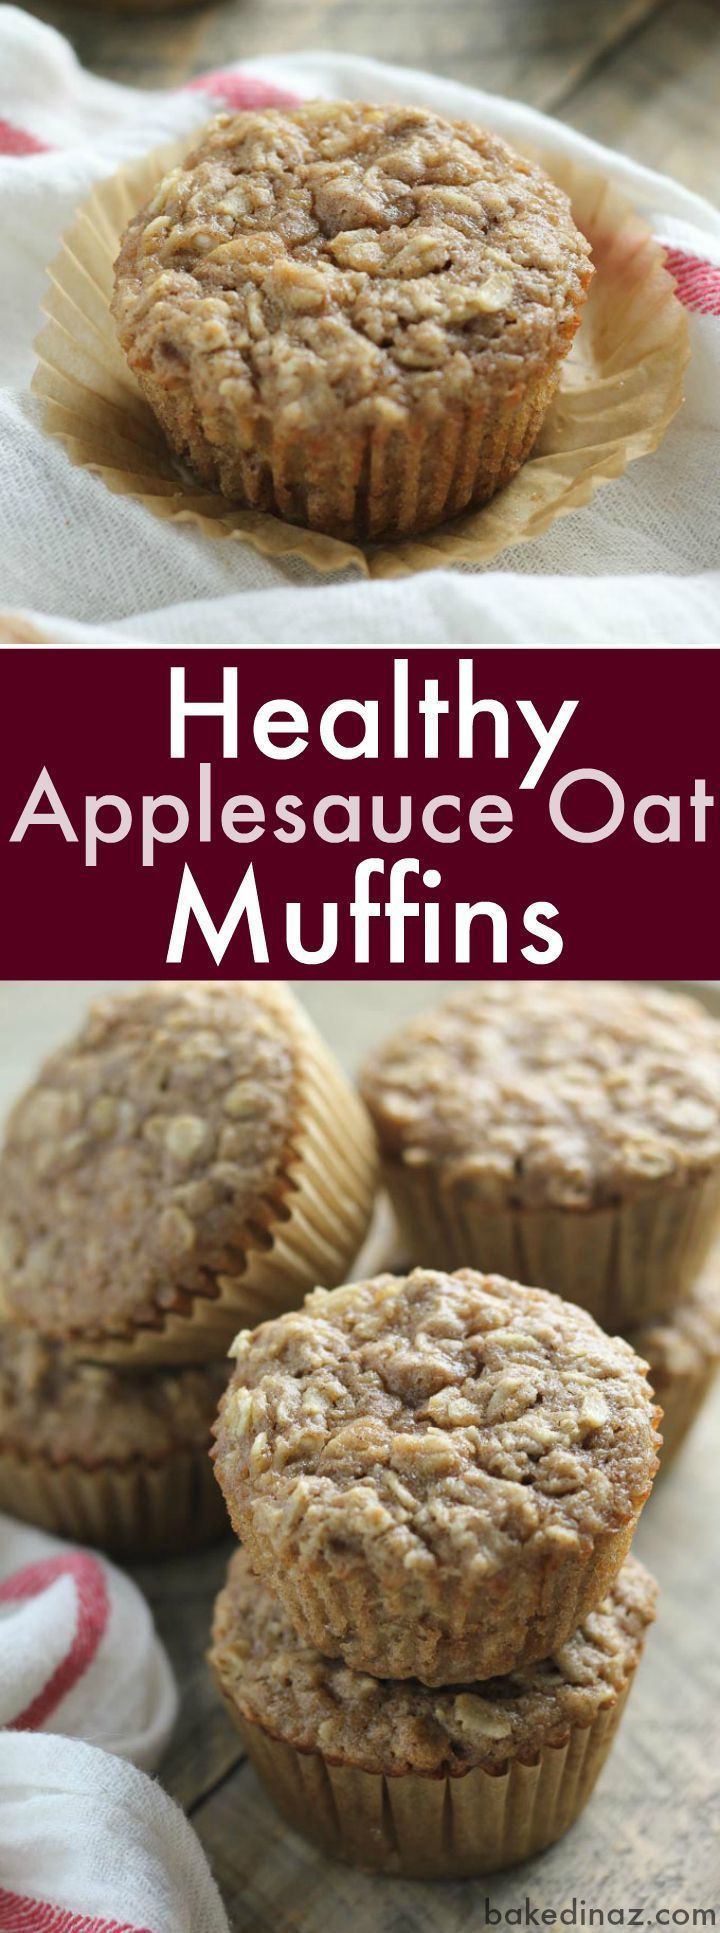 Applesauce Muffins Paleo
 Applesauce Oat Muffins